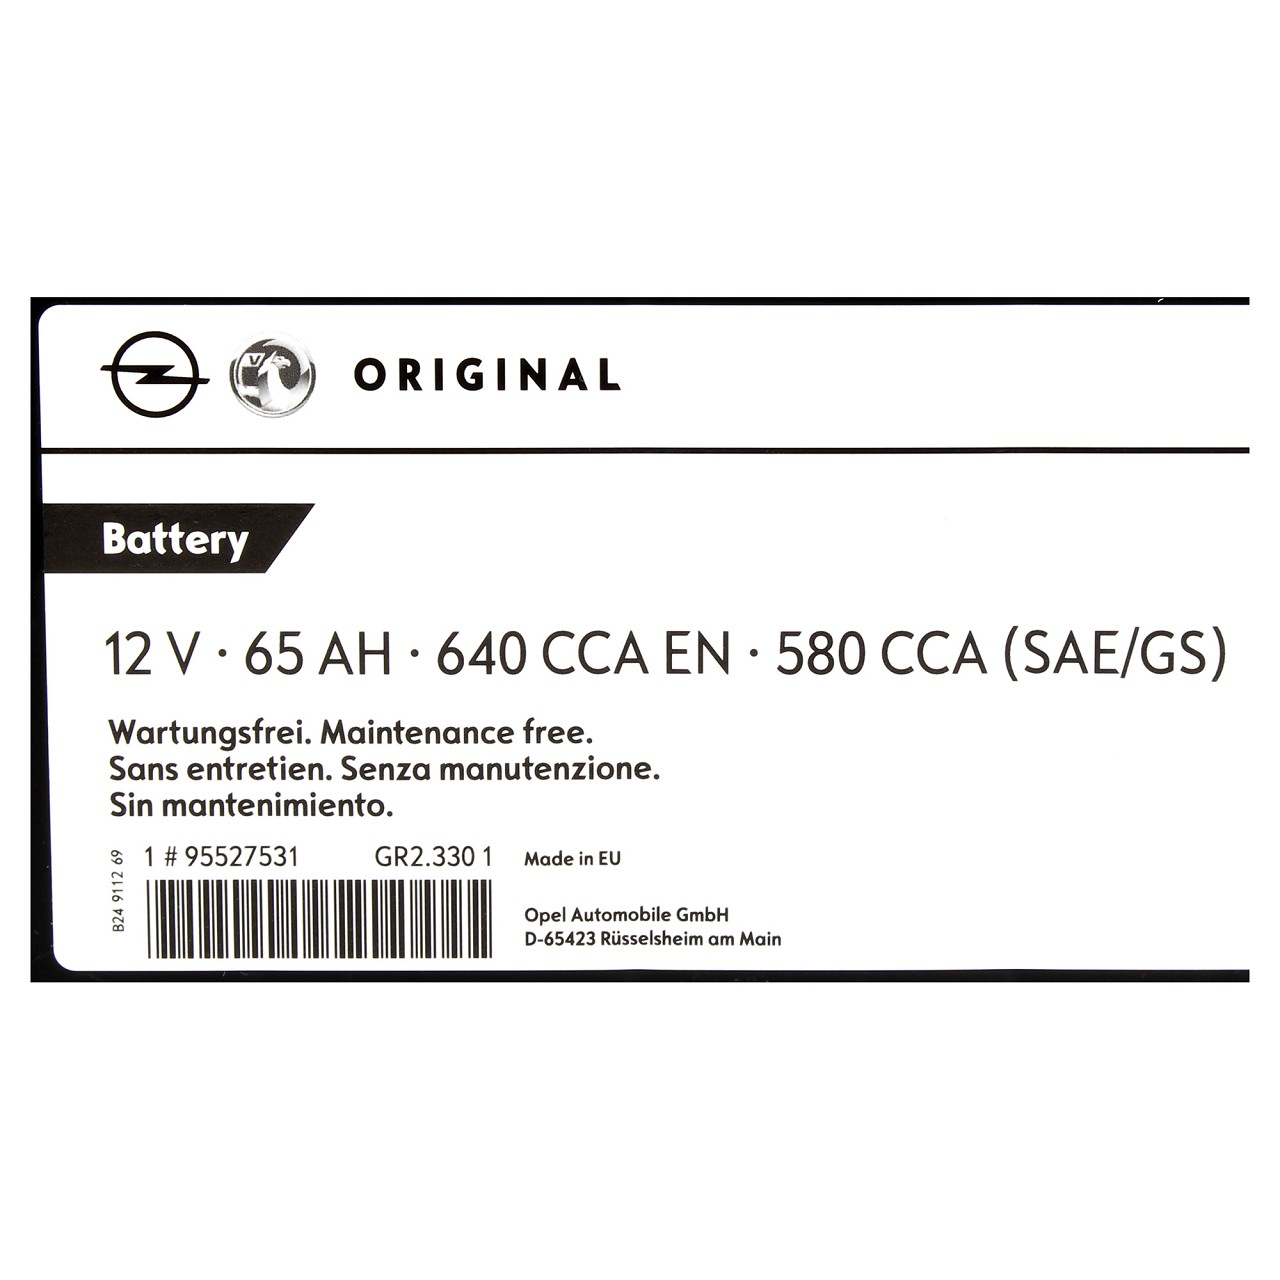 ORIGINAL GM Opel Autobatterie Starterbatterie 12V 65Ah 580 CCA EN 95530725